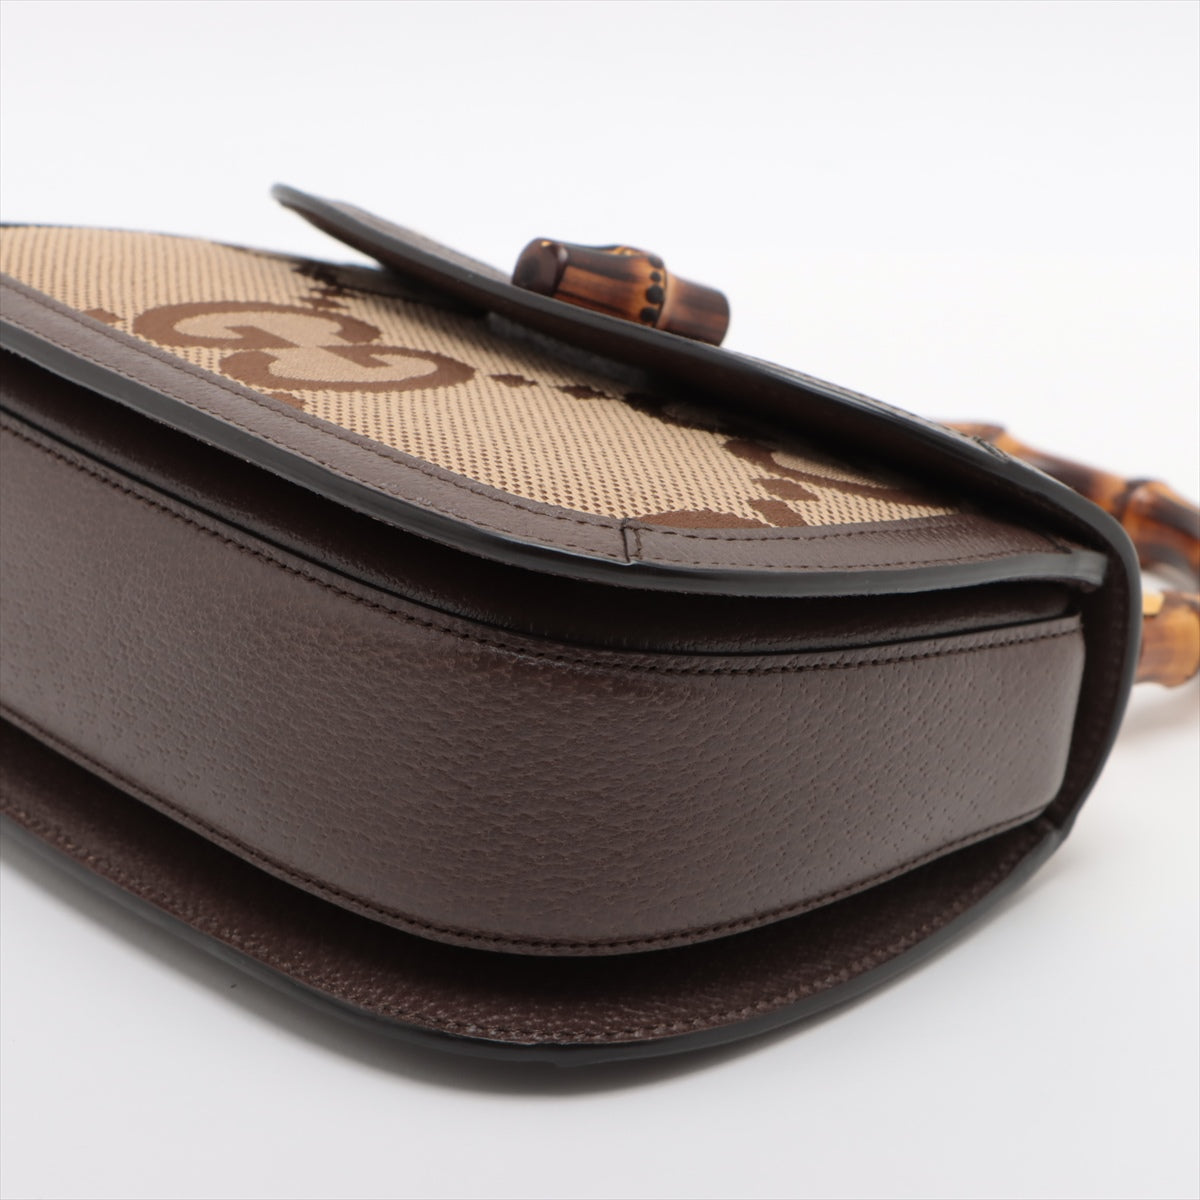 Gucci Bamboo 1947 Canvas & leather 2way handbag Brown 675797